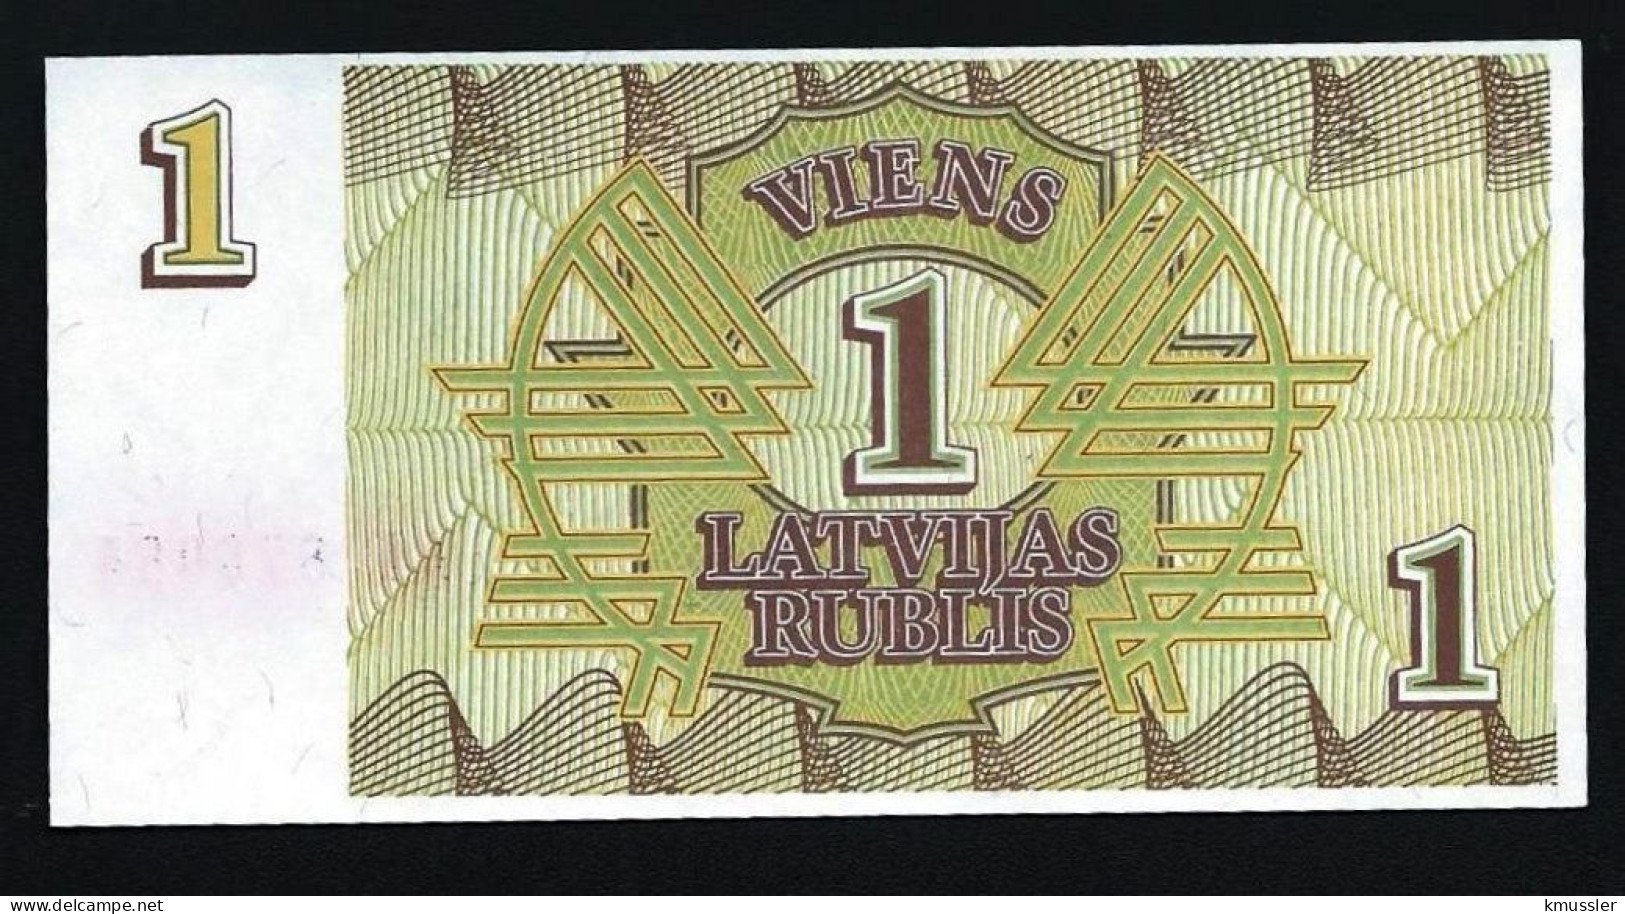 # # # Banknote Lettland (Latvijas) 1 Rubel (Rublis) 1992 UNC # # # - Lettland